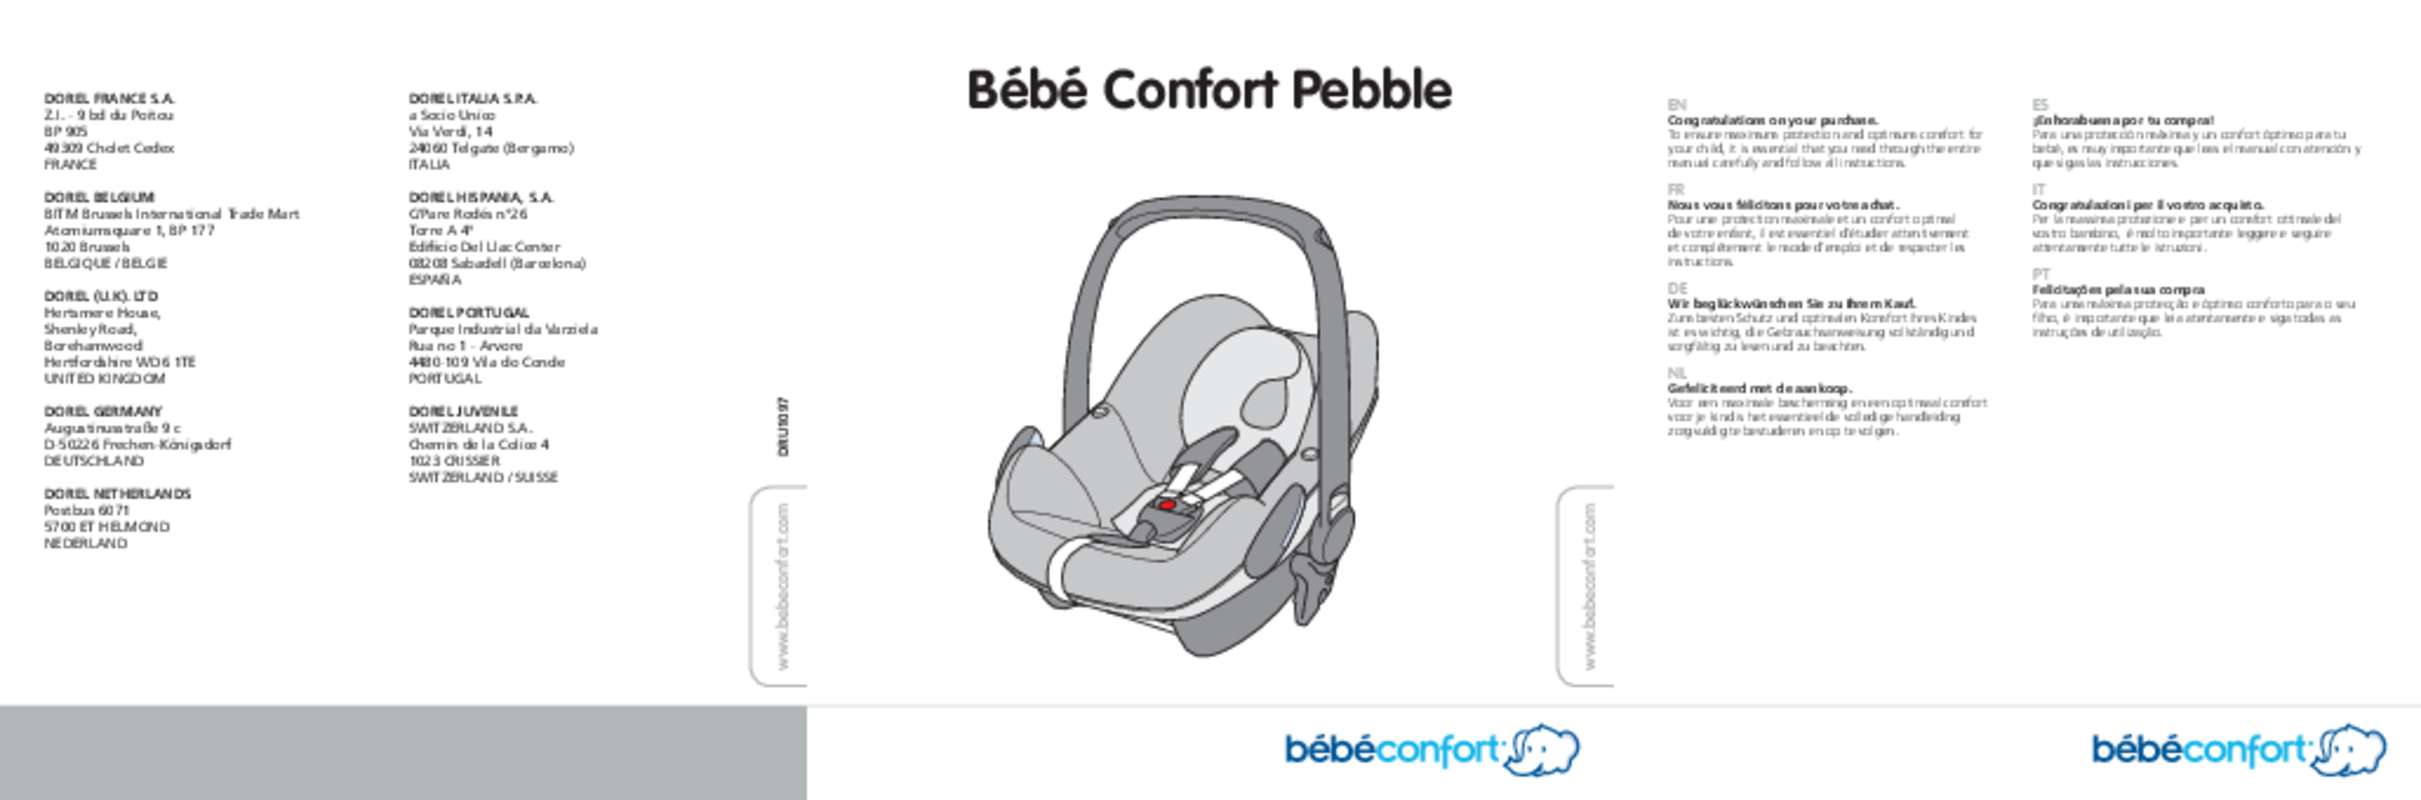 Surrey But Portable cosy bebe confort pebble Critique Homologue vapeur